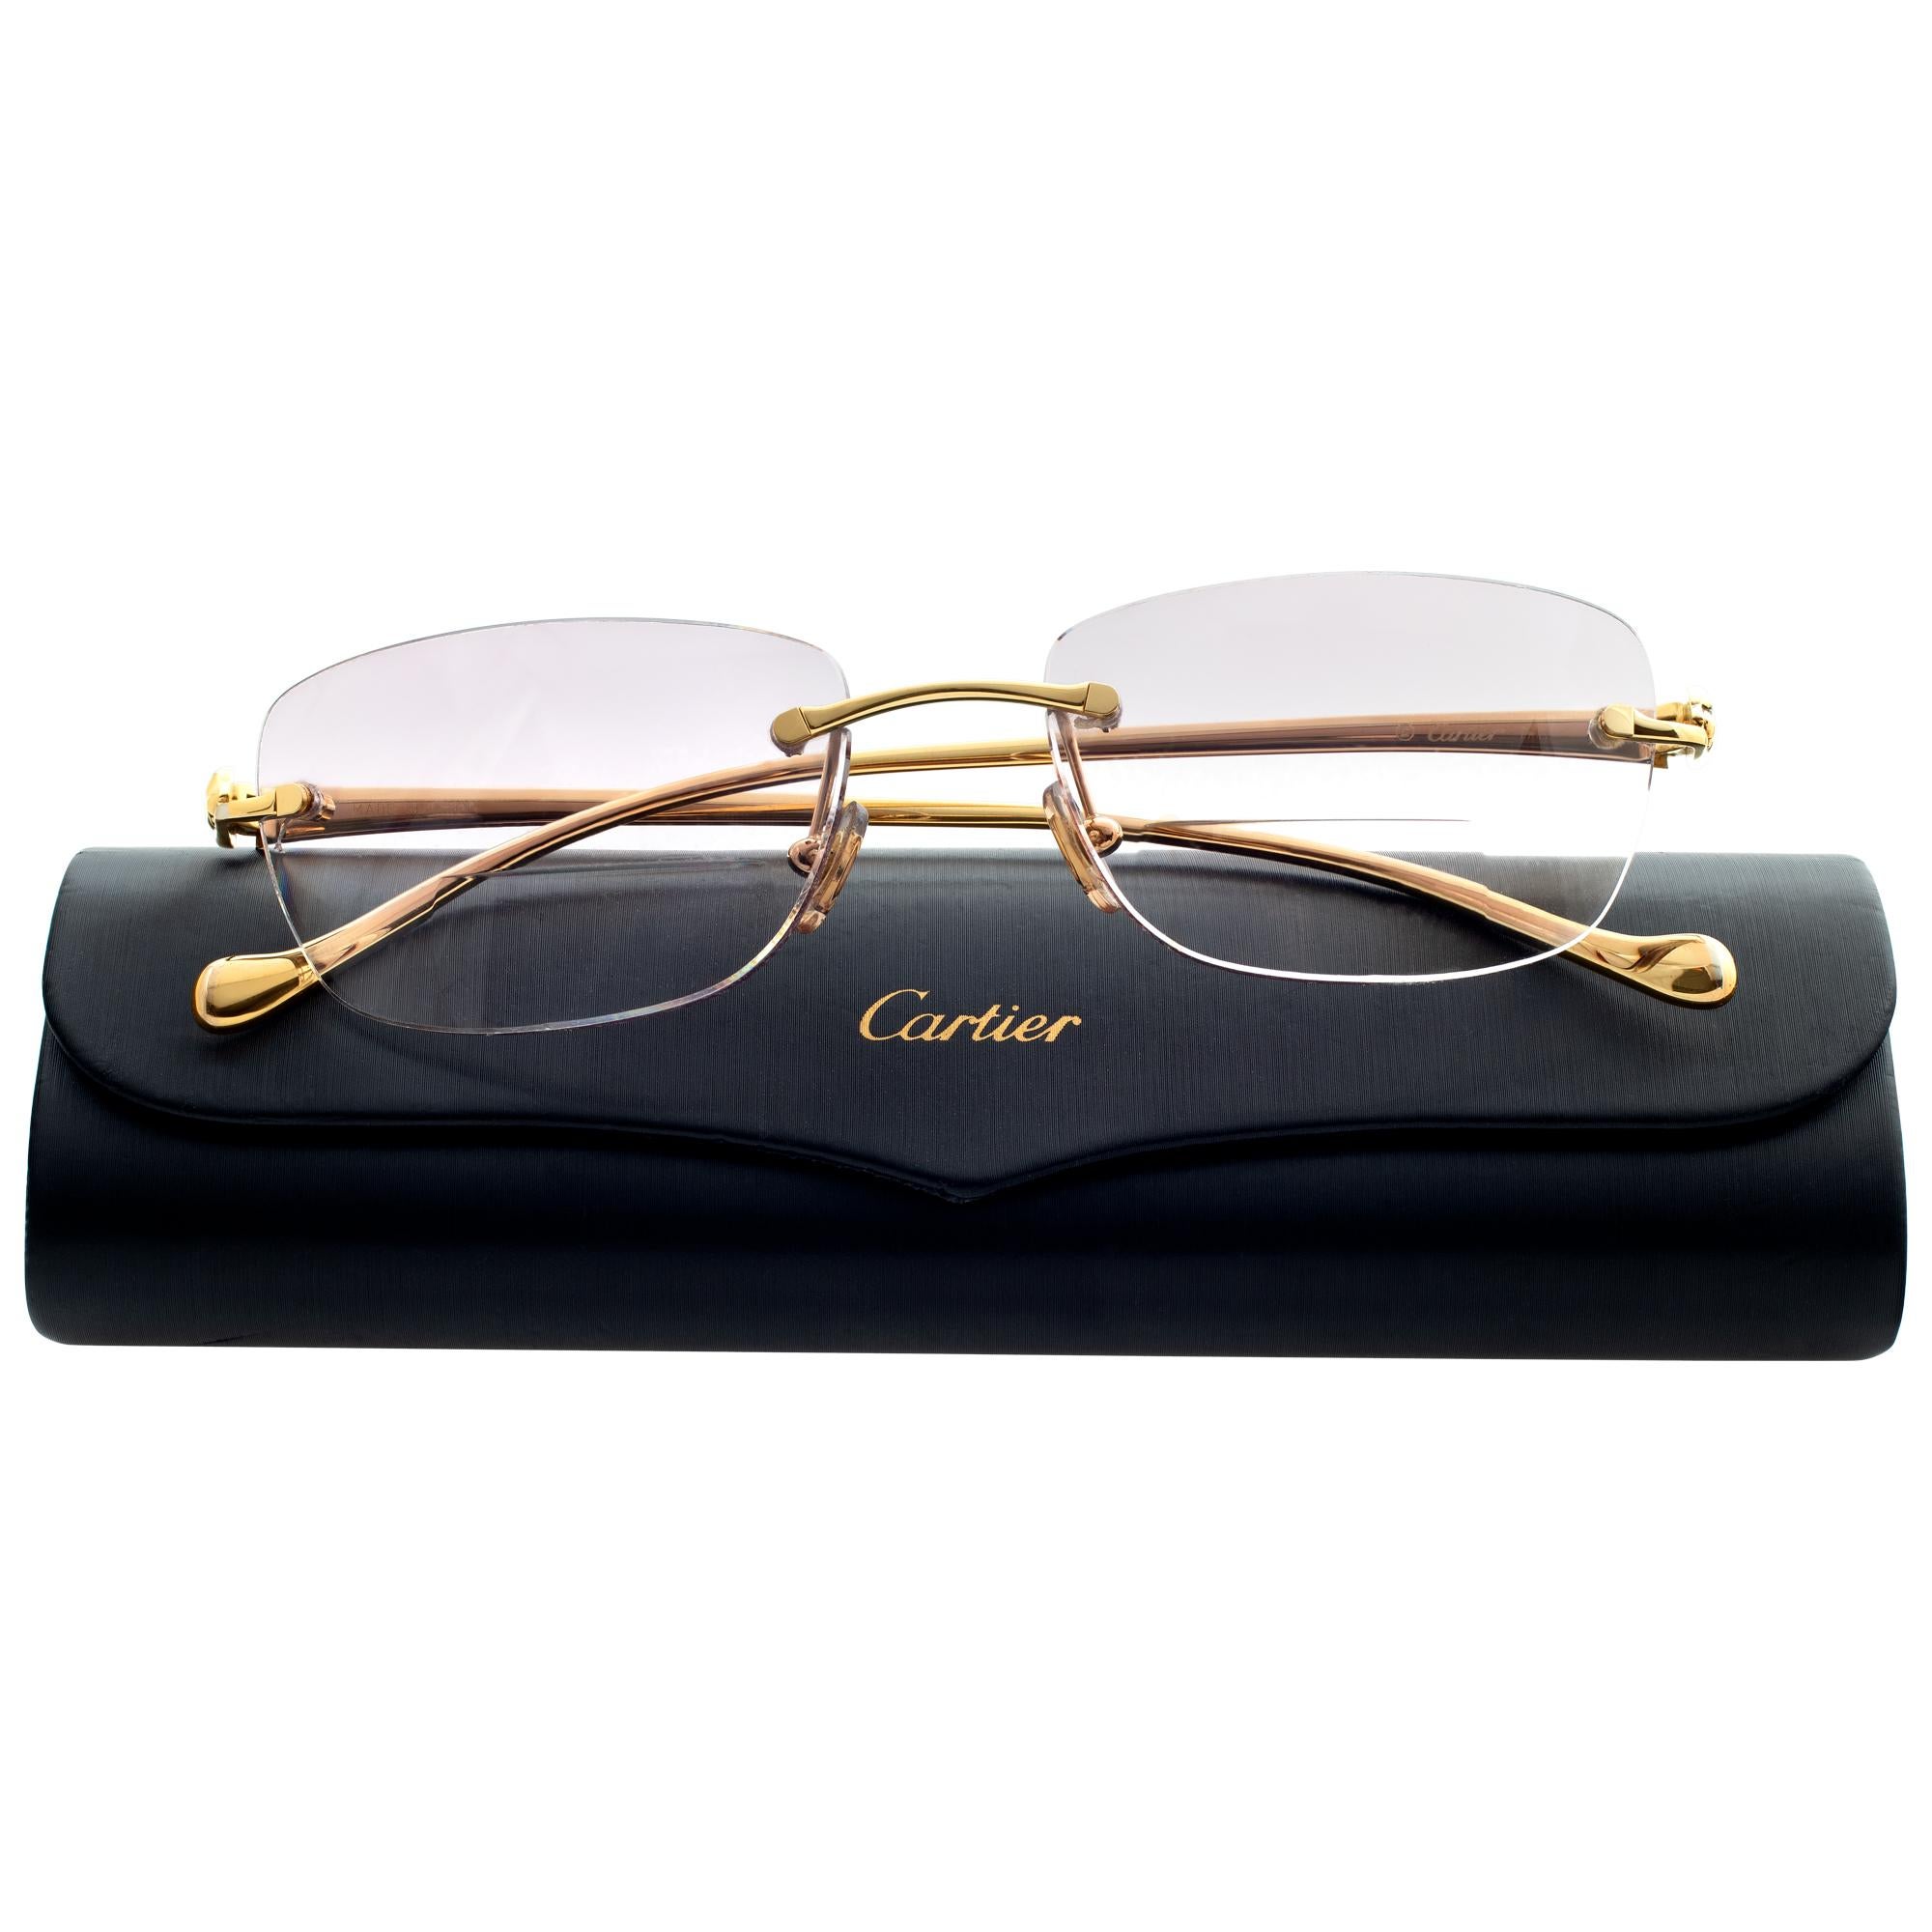 Cartier Rimless Panthère de Cartier eyeglasses In Excellent Condition For Sale In Surfside, FL